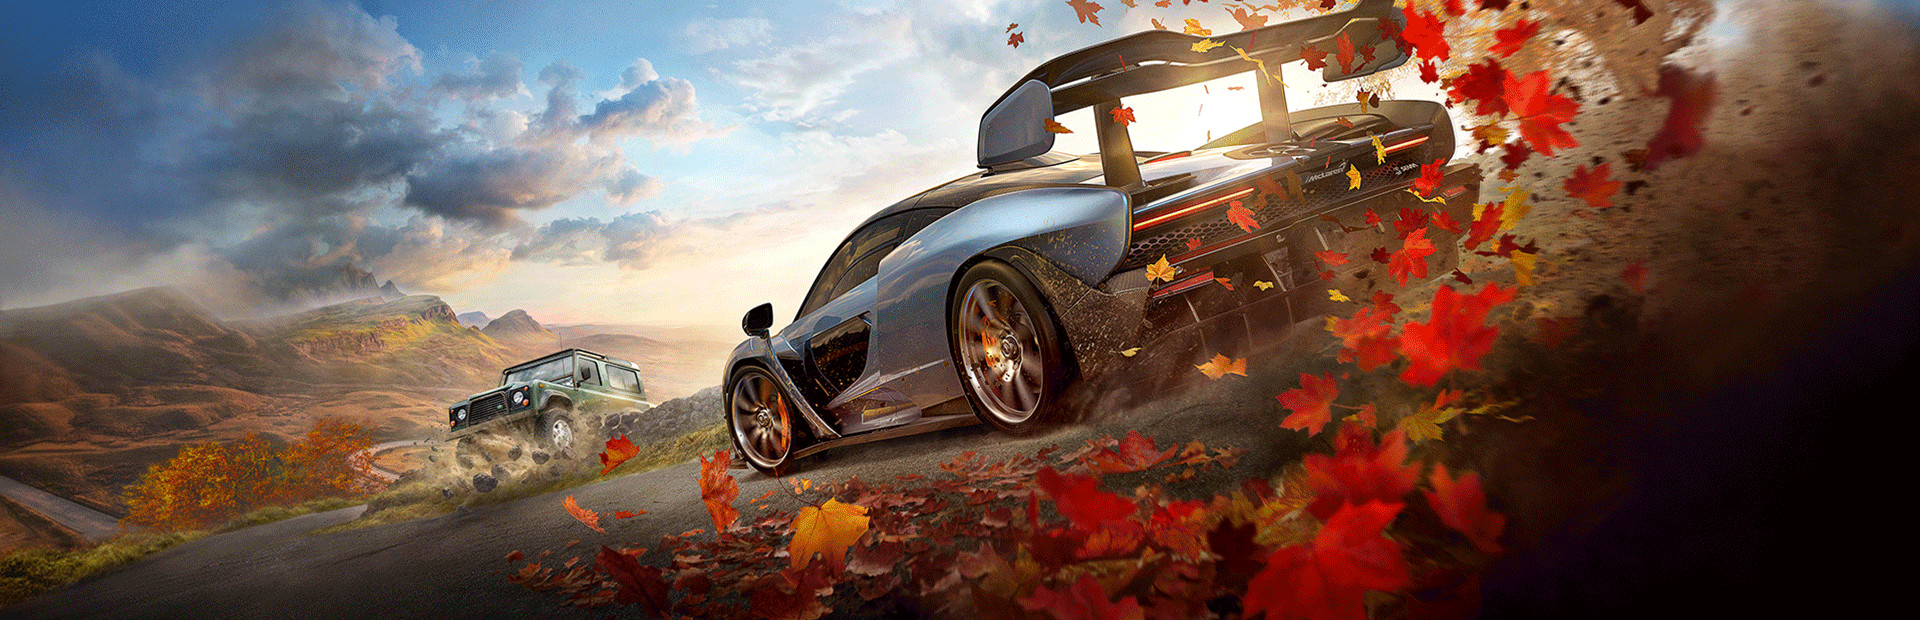 Forza Horizon 4 cover image